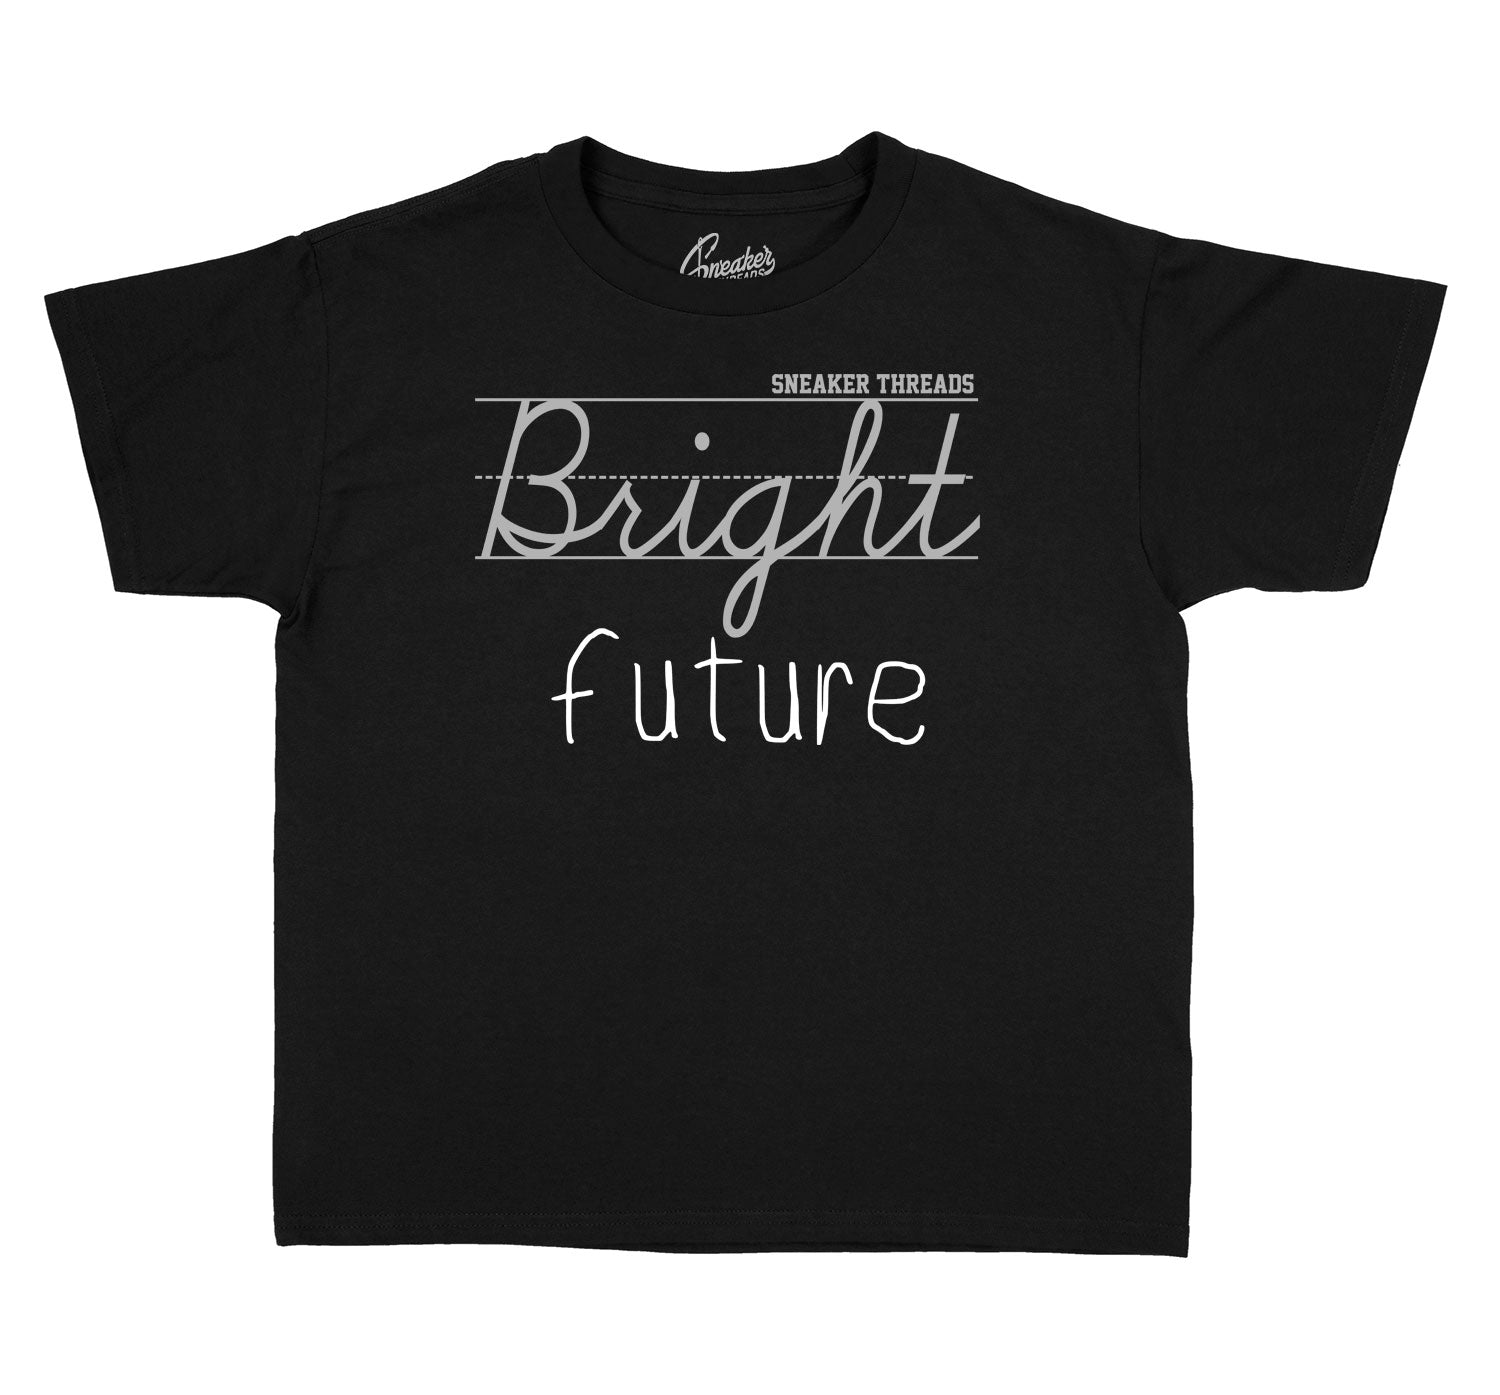 Kids Jubilee 11 Shirt - Bright Future - Black